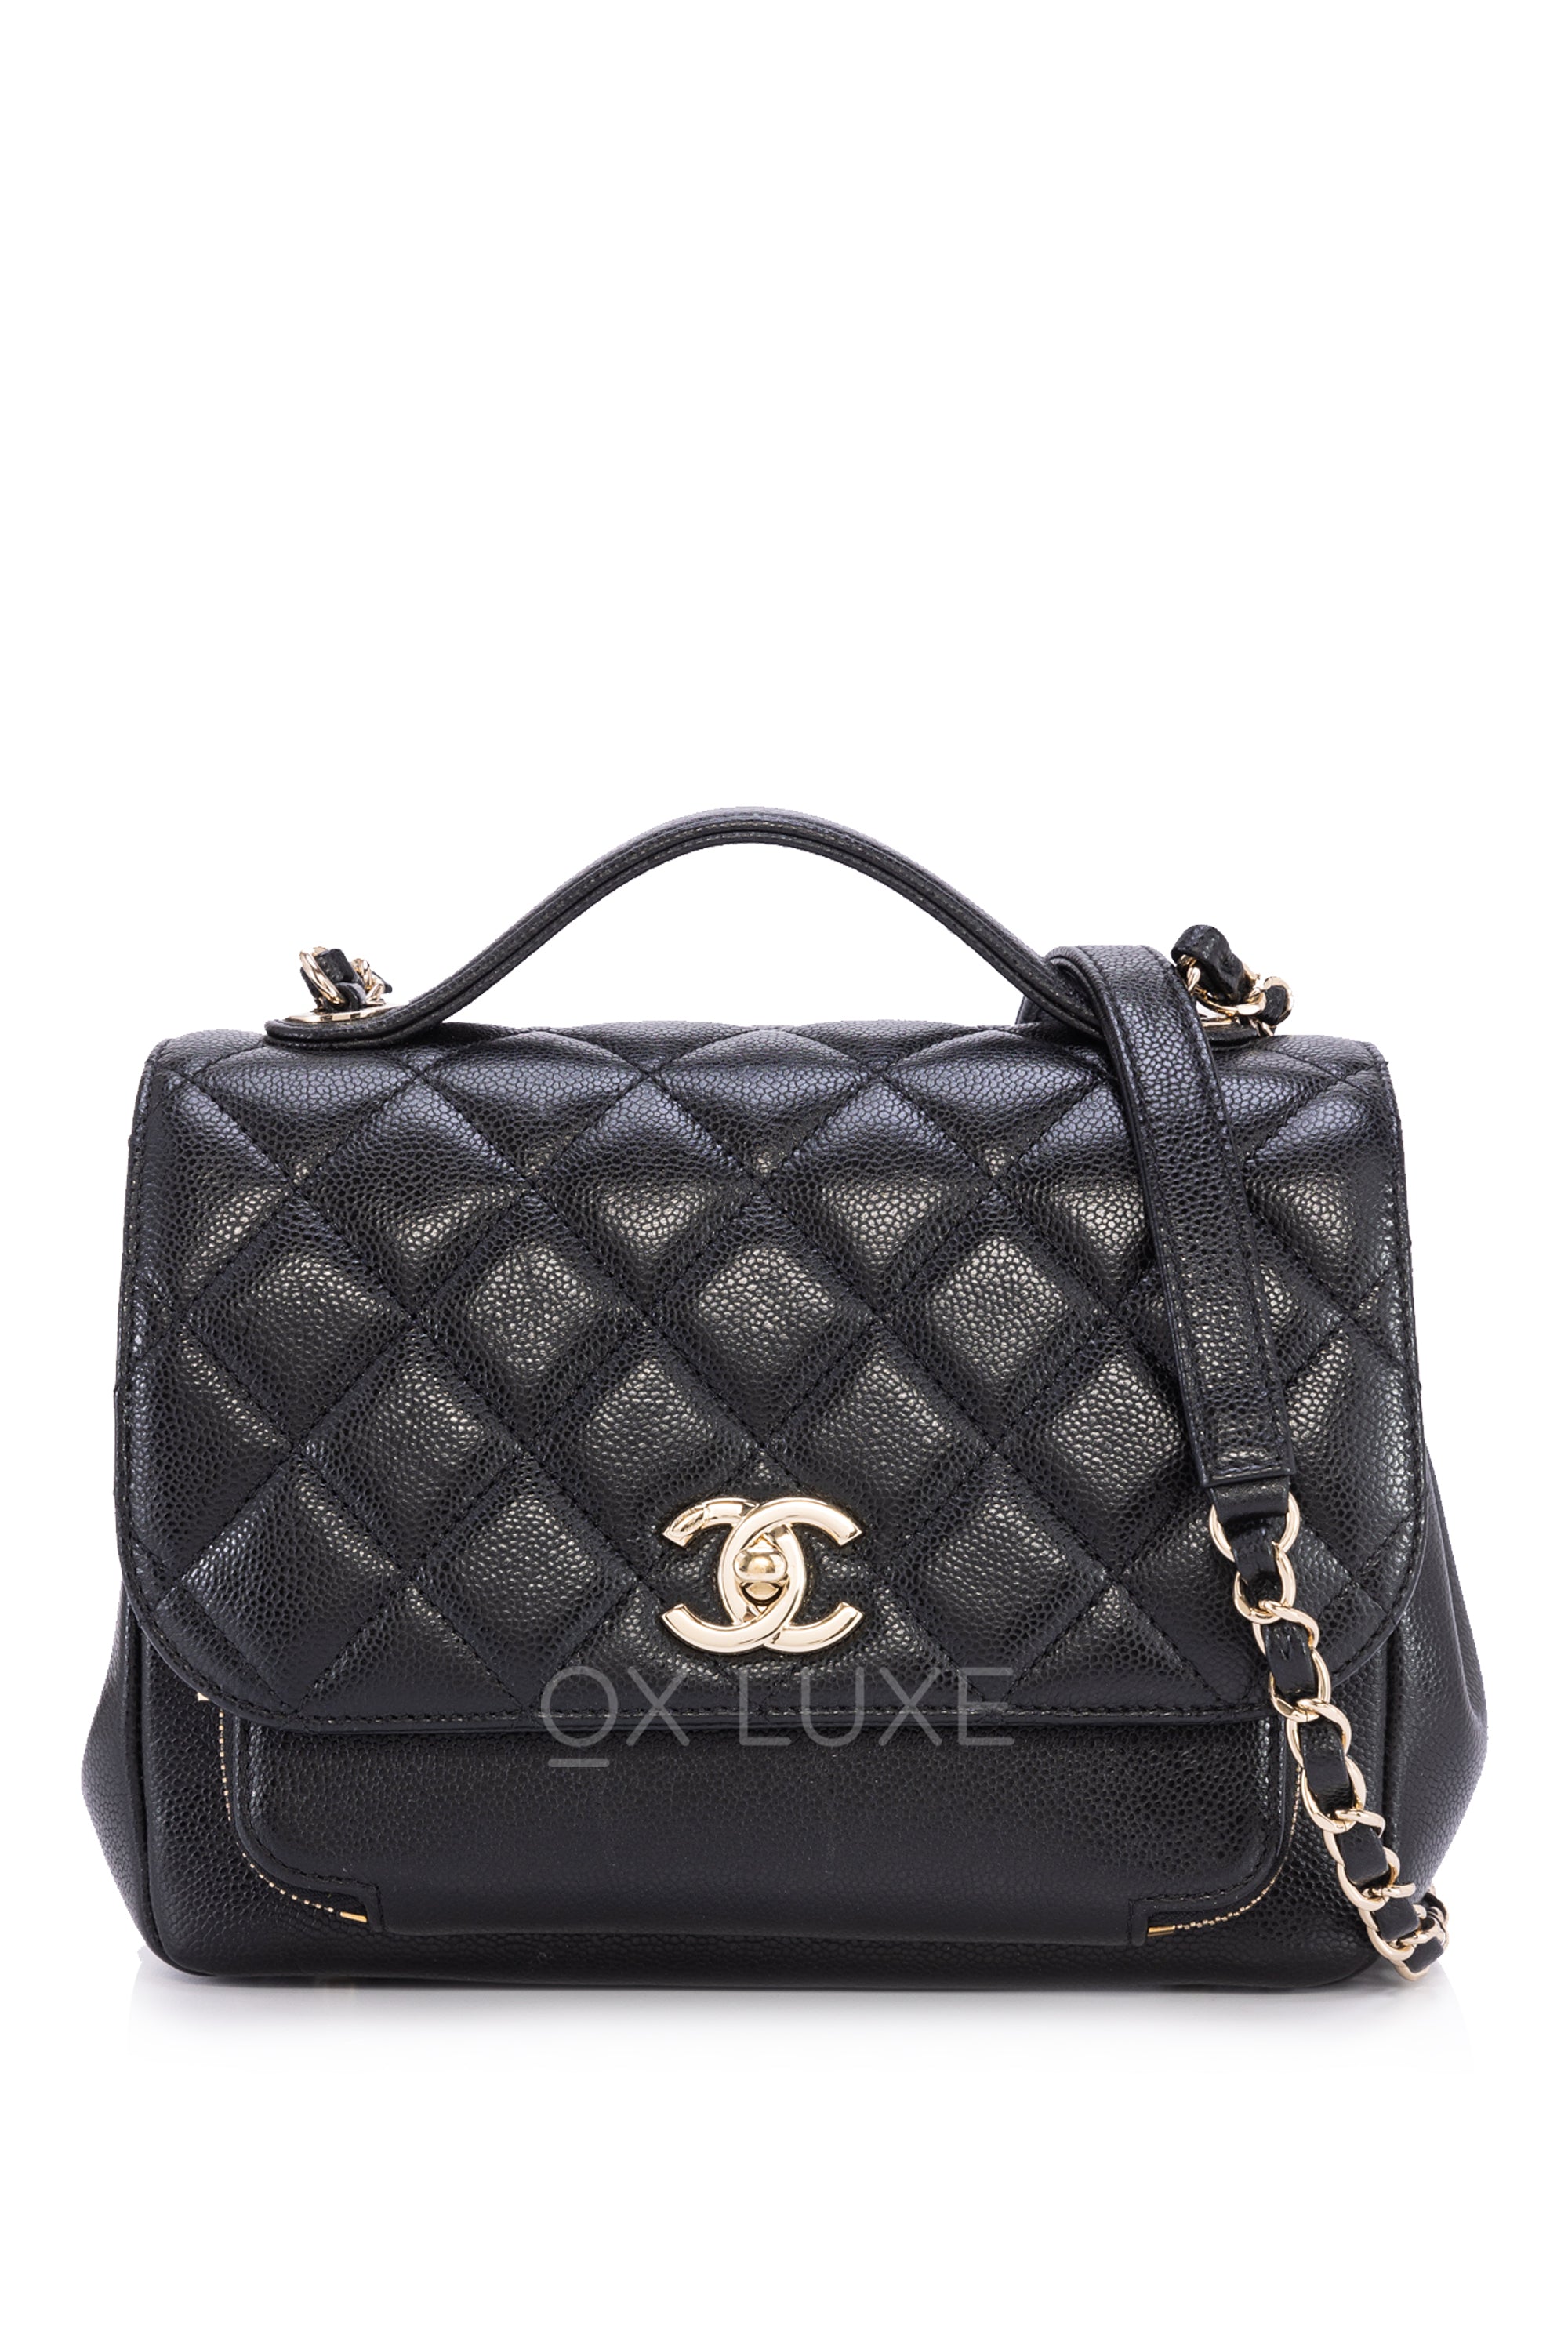 Chanel Business Affinity Medium Crossbody Bag Caviar Leather oxluxe